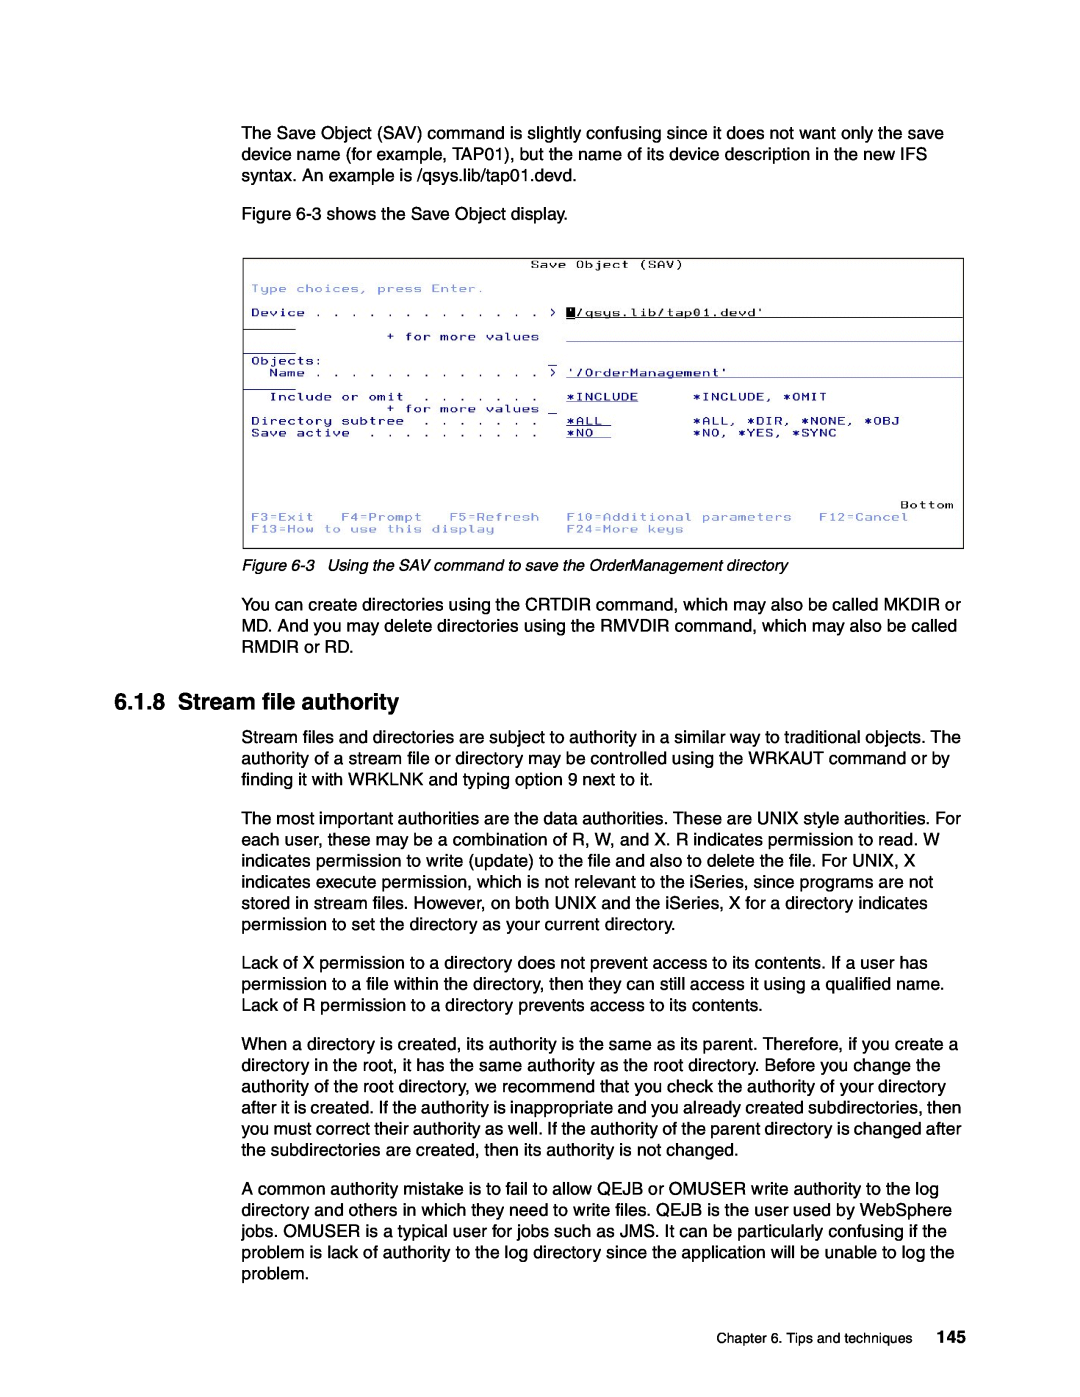 IBM SG24-6526-00 manual Stream file authority 